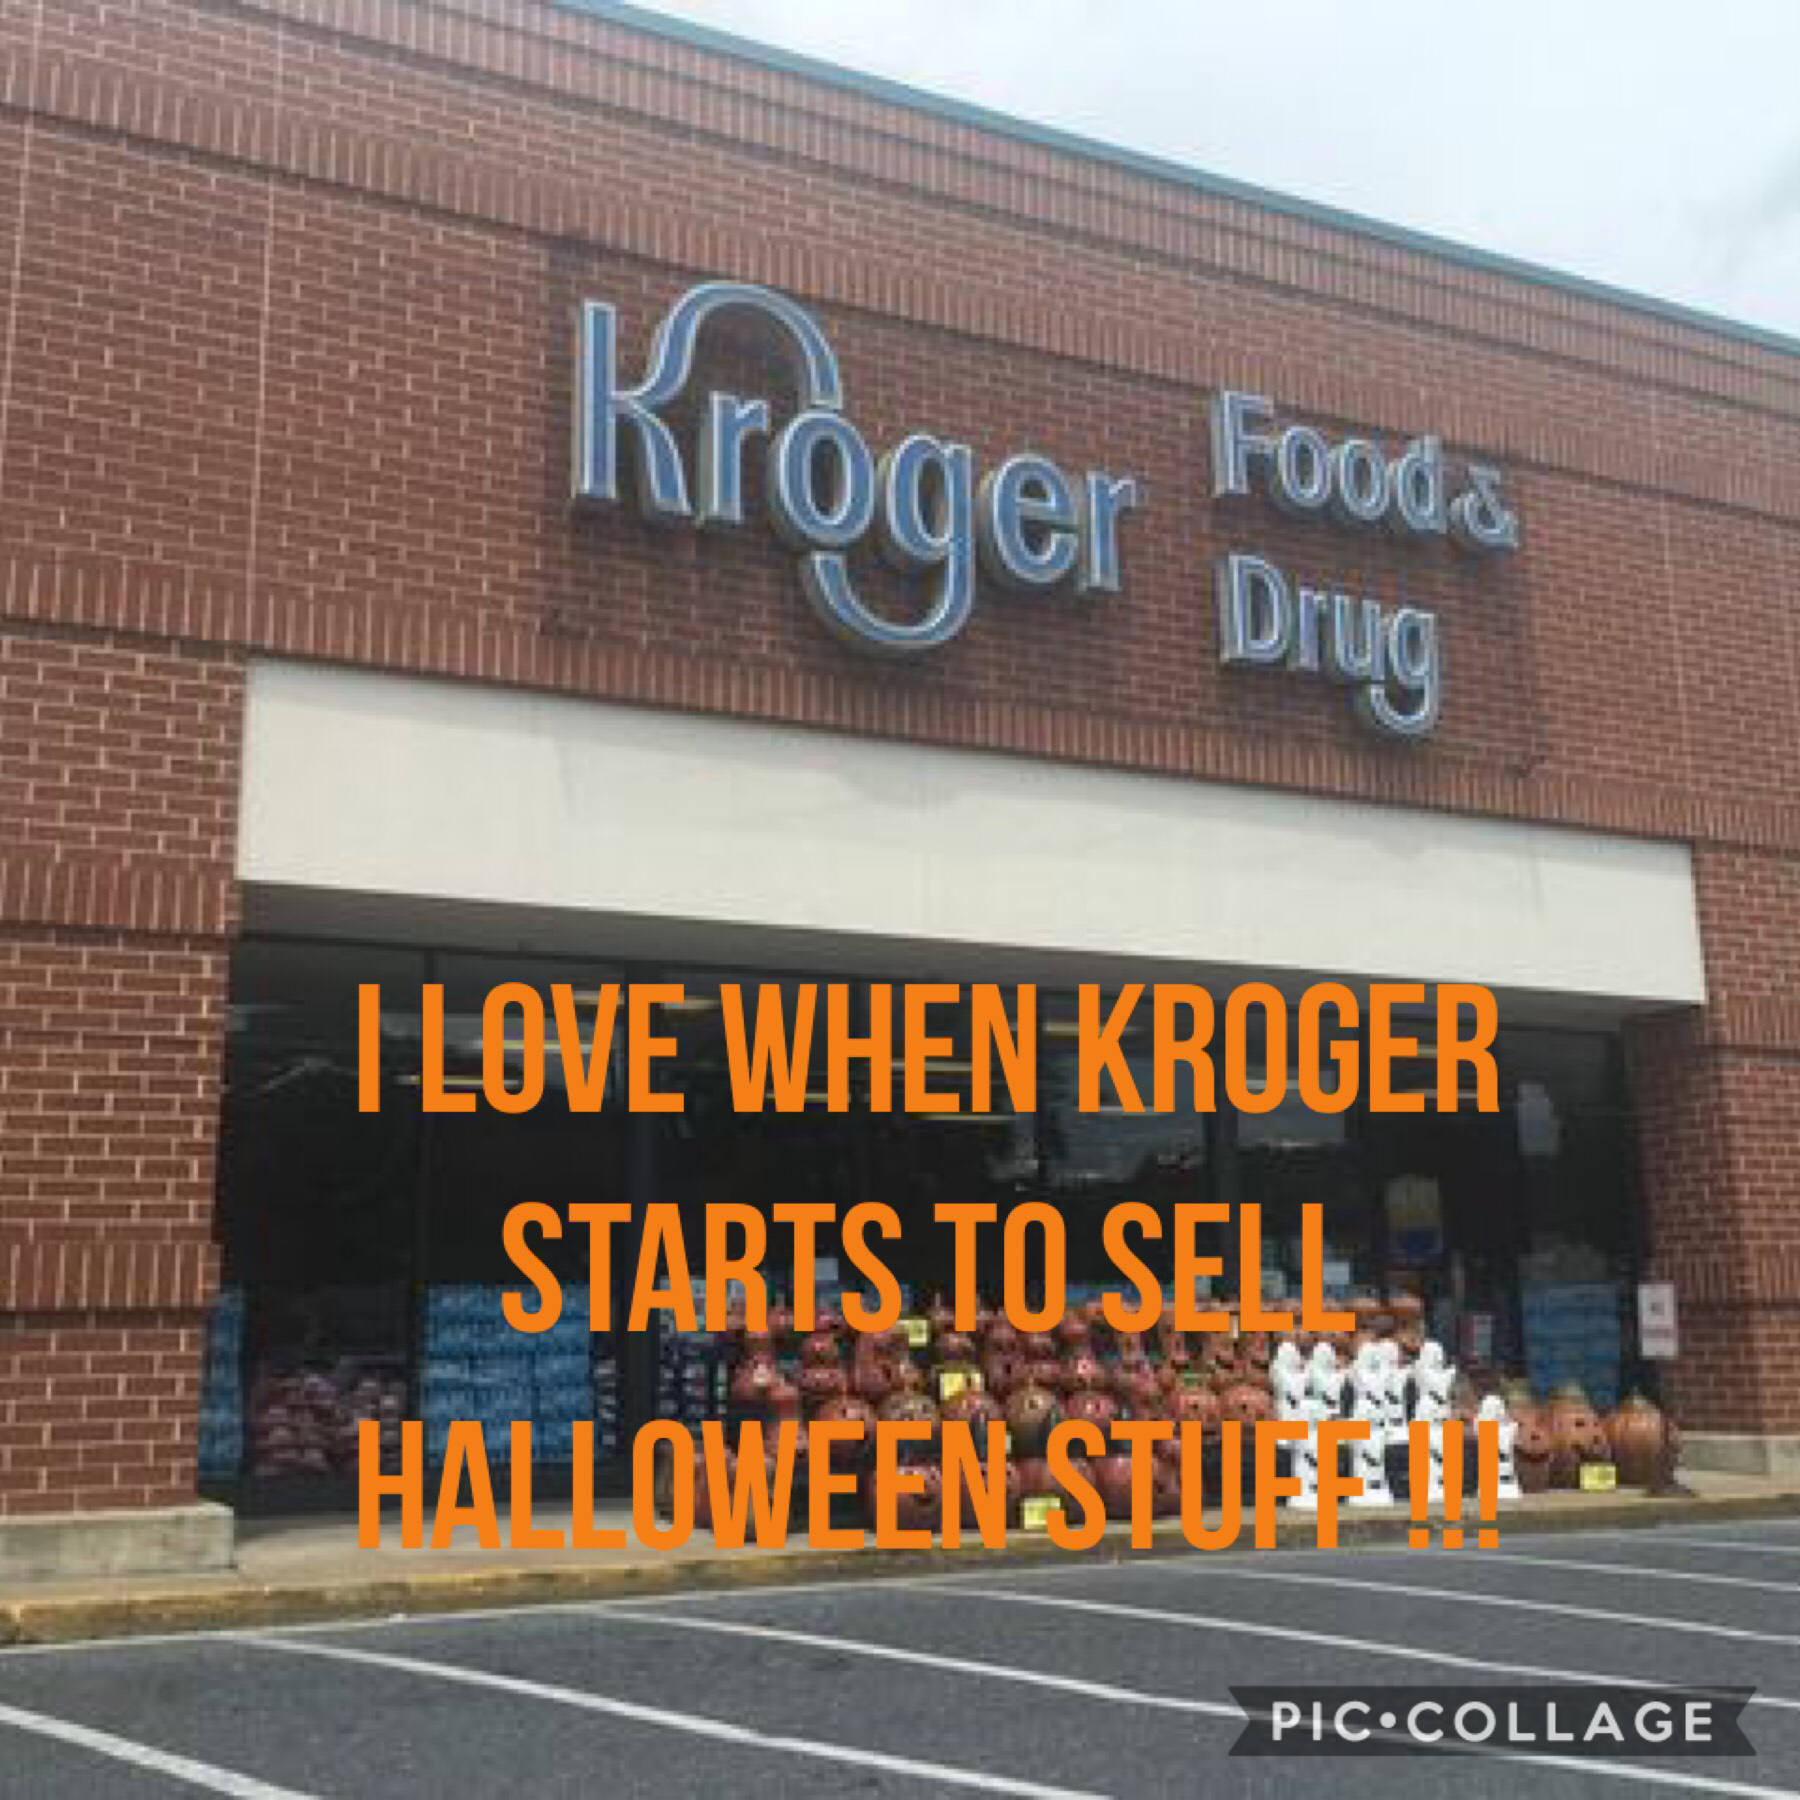 I love Kroger @ Halloween time 🎃